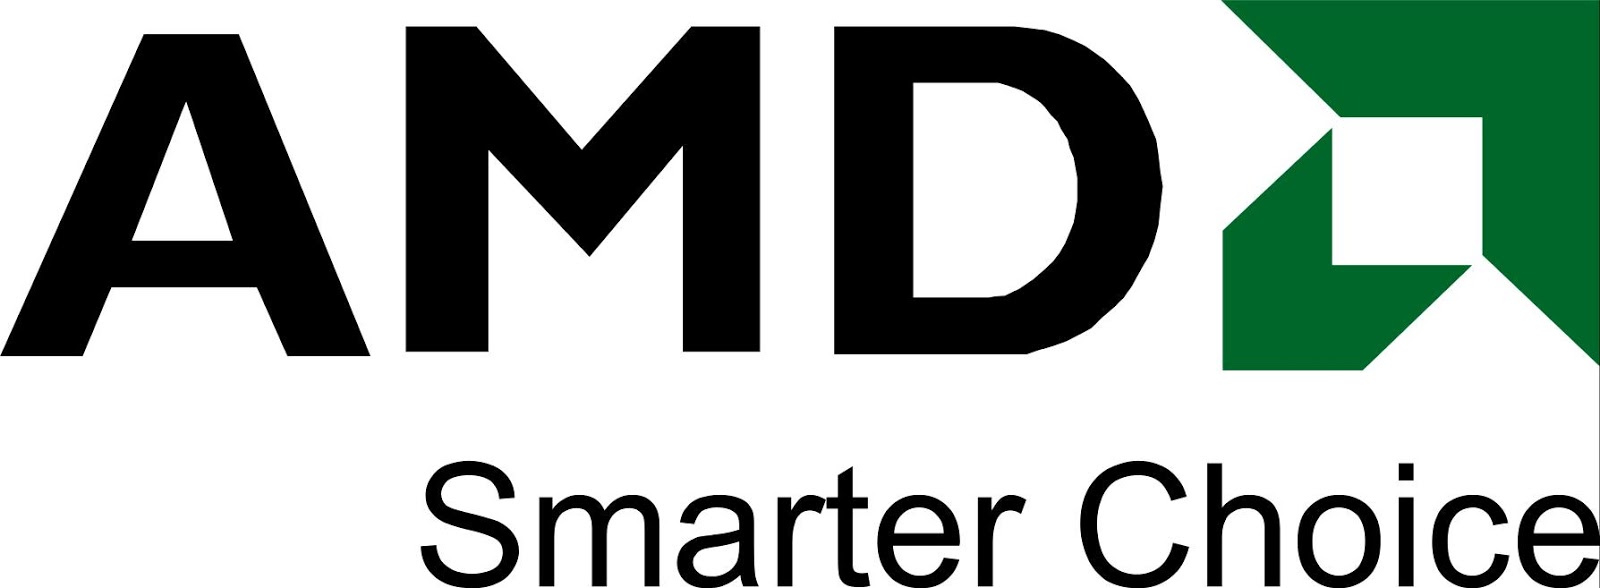 AMD brand